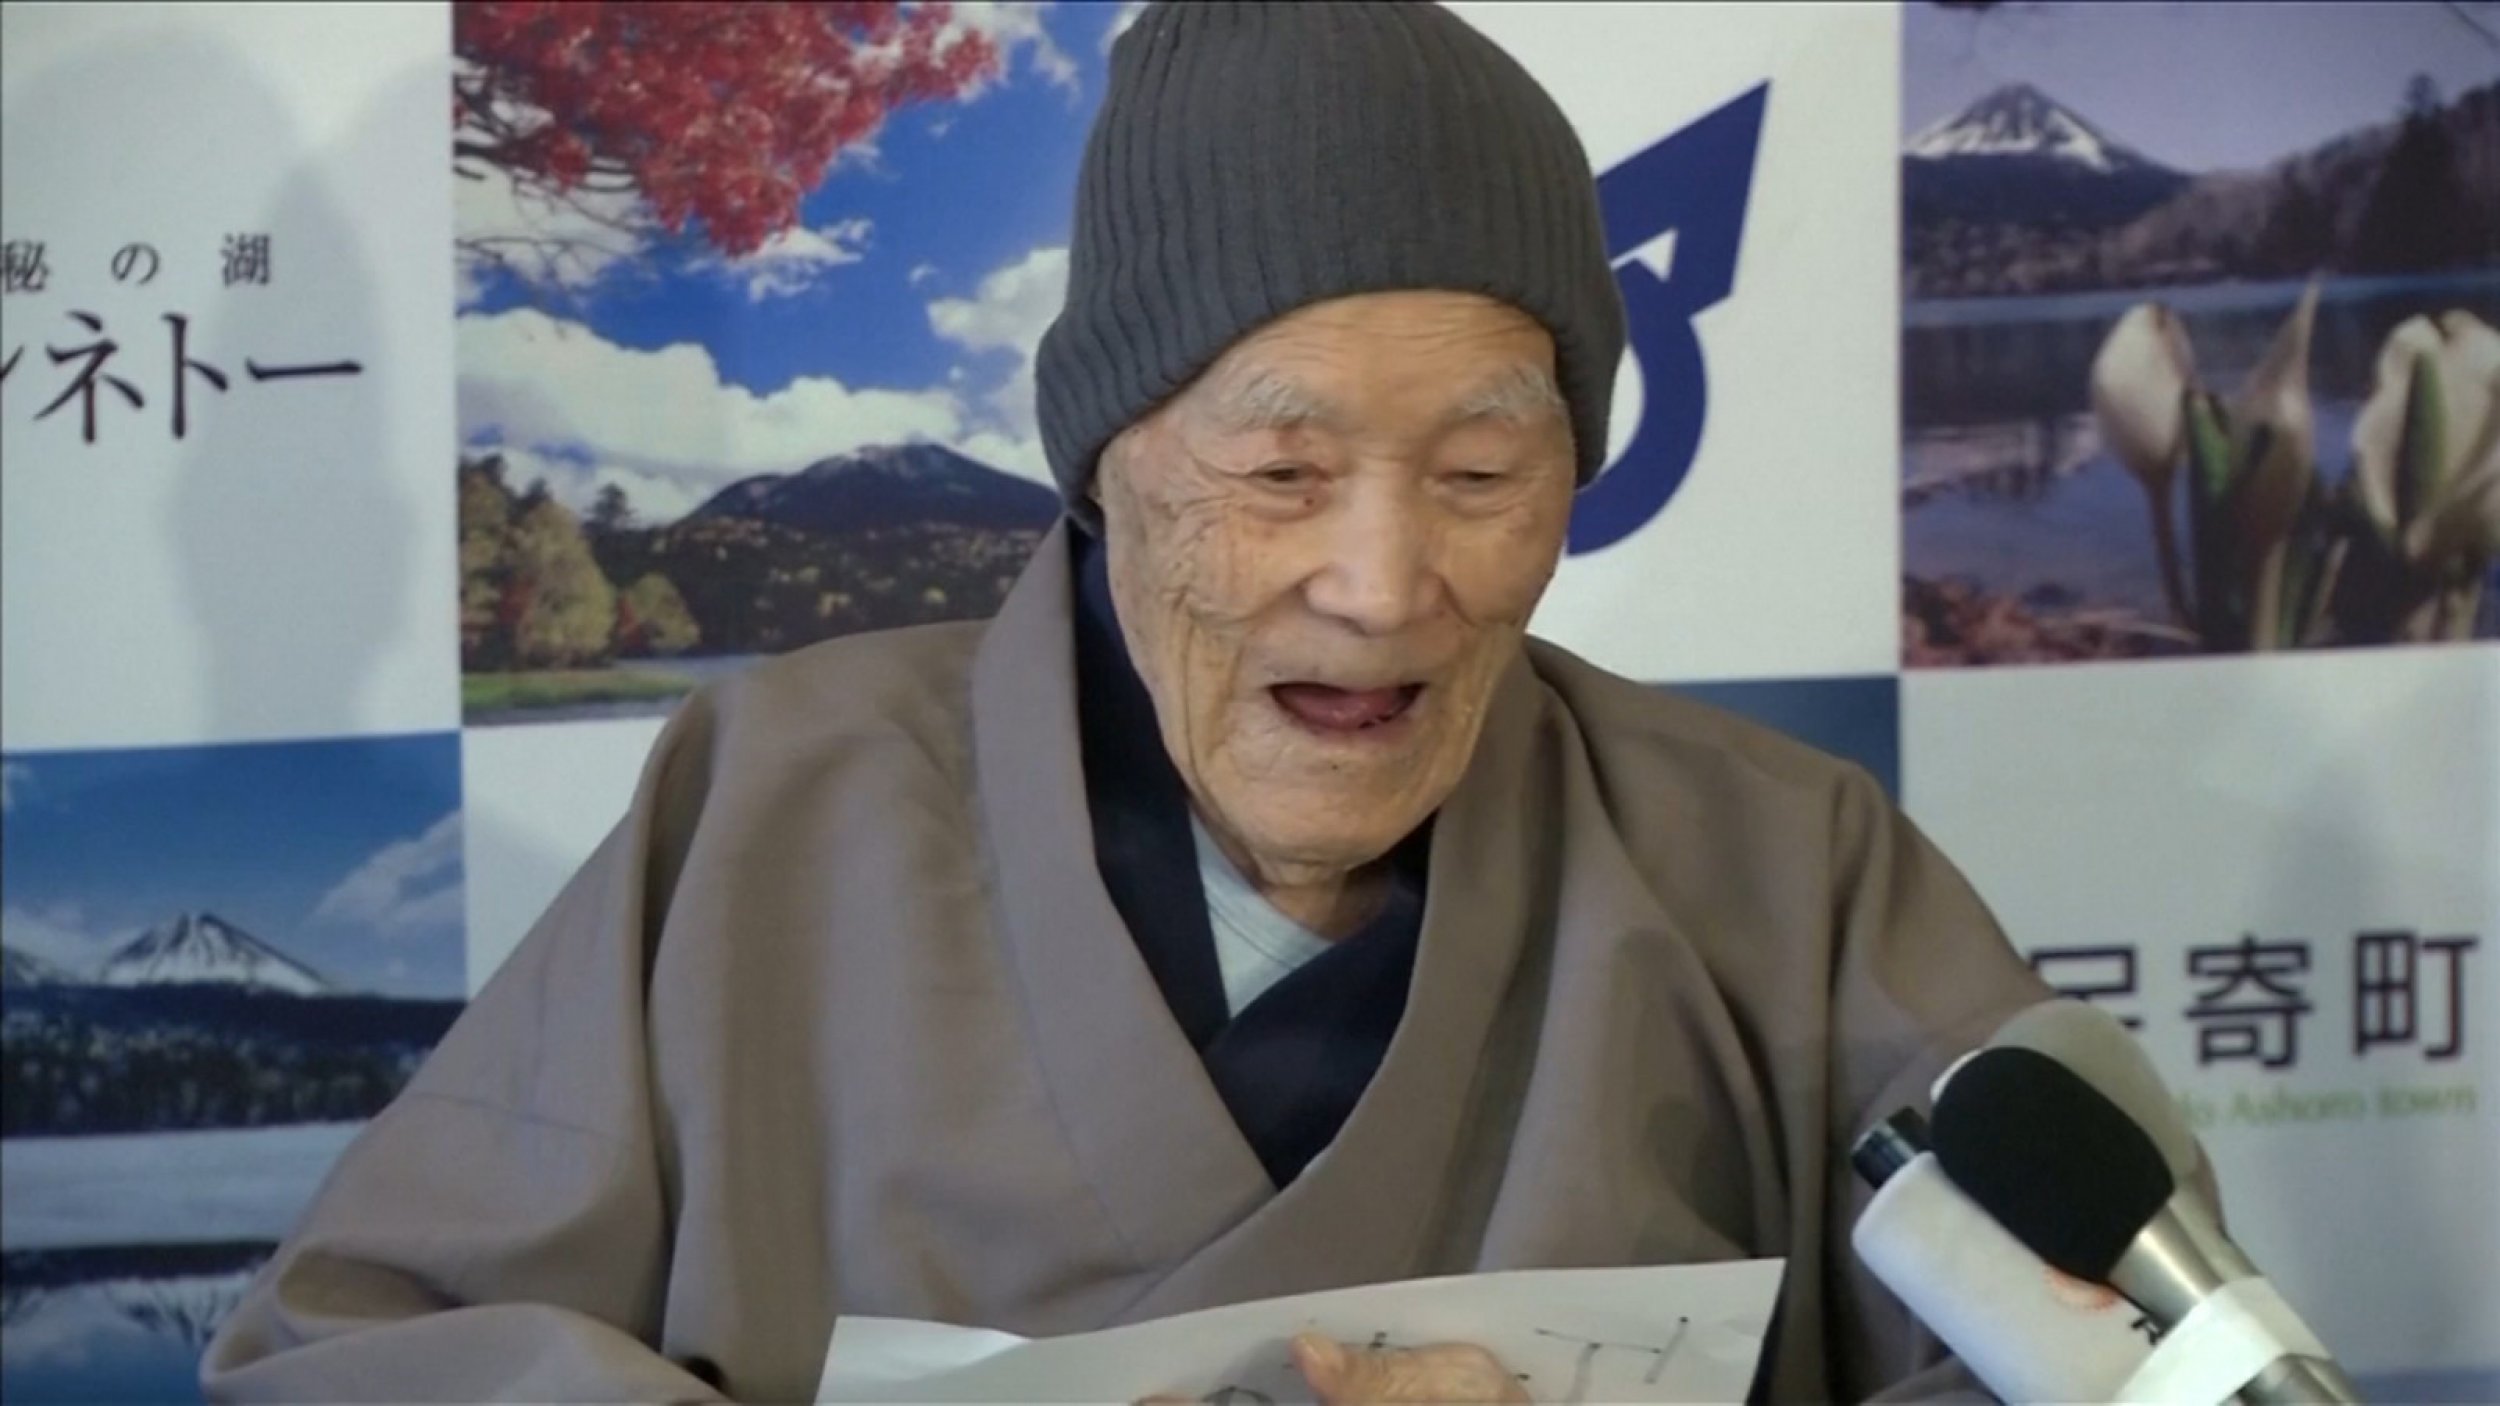 Worlds Oldest Living Man Celebrates 113th Birthday